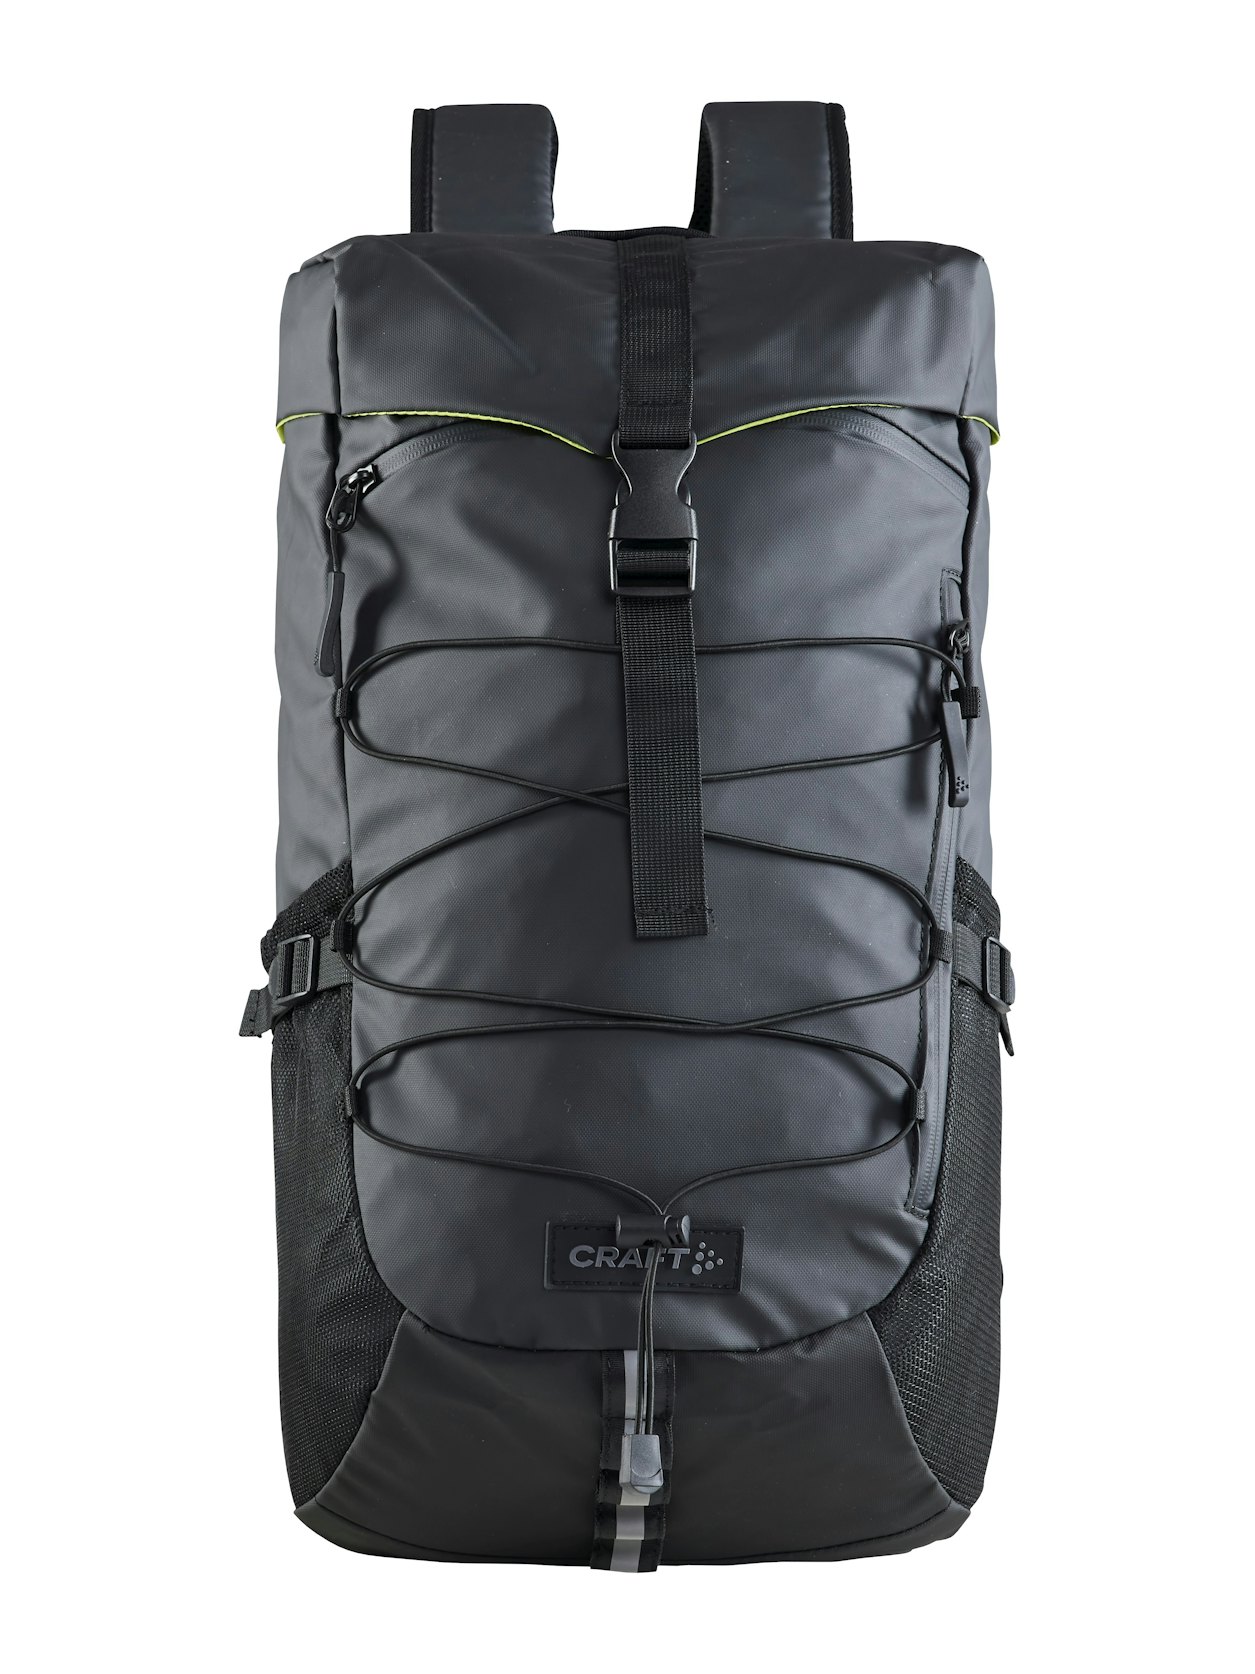 Adv Entity Travel Backpack 25 L - Grey